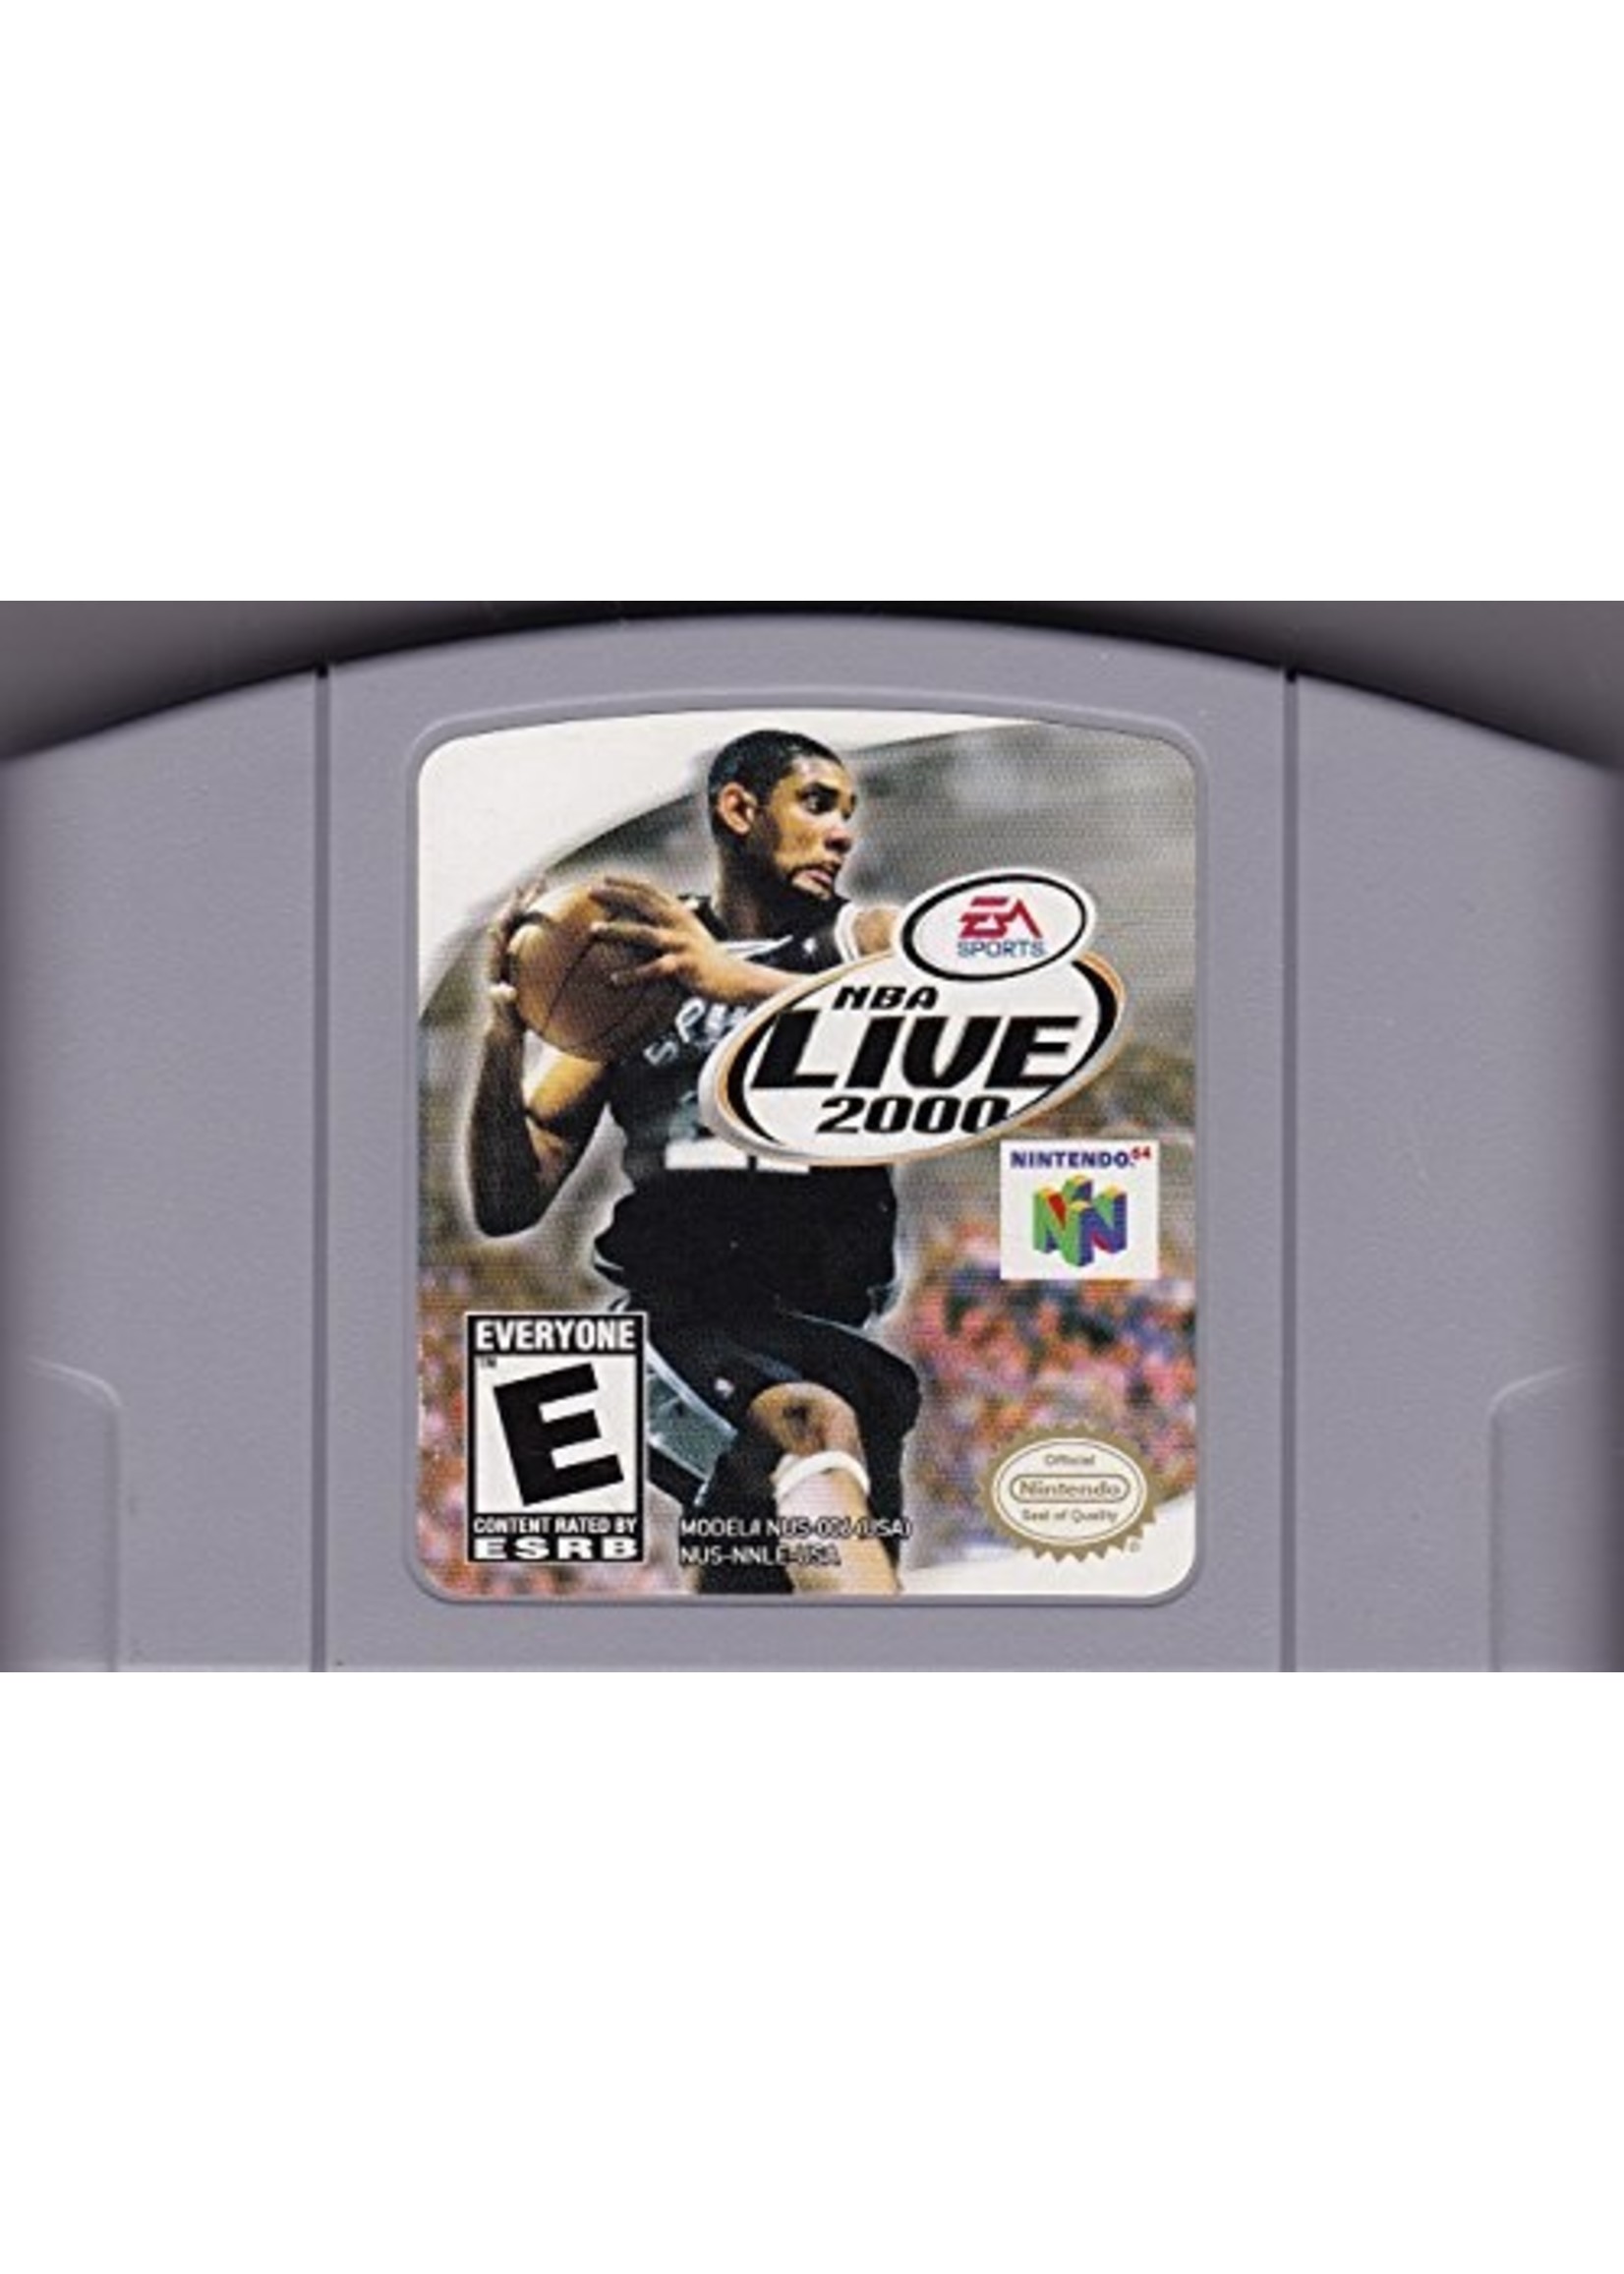 Nintendo 64 (N64) NBA Live 2000